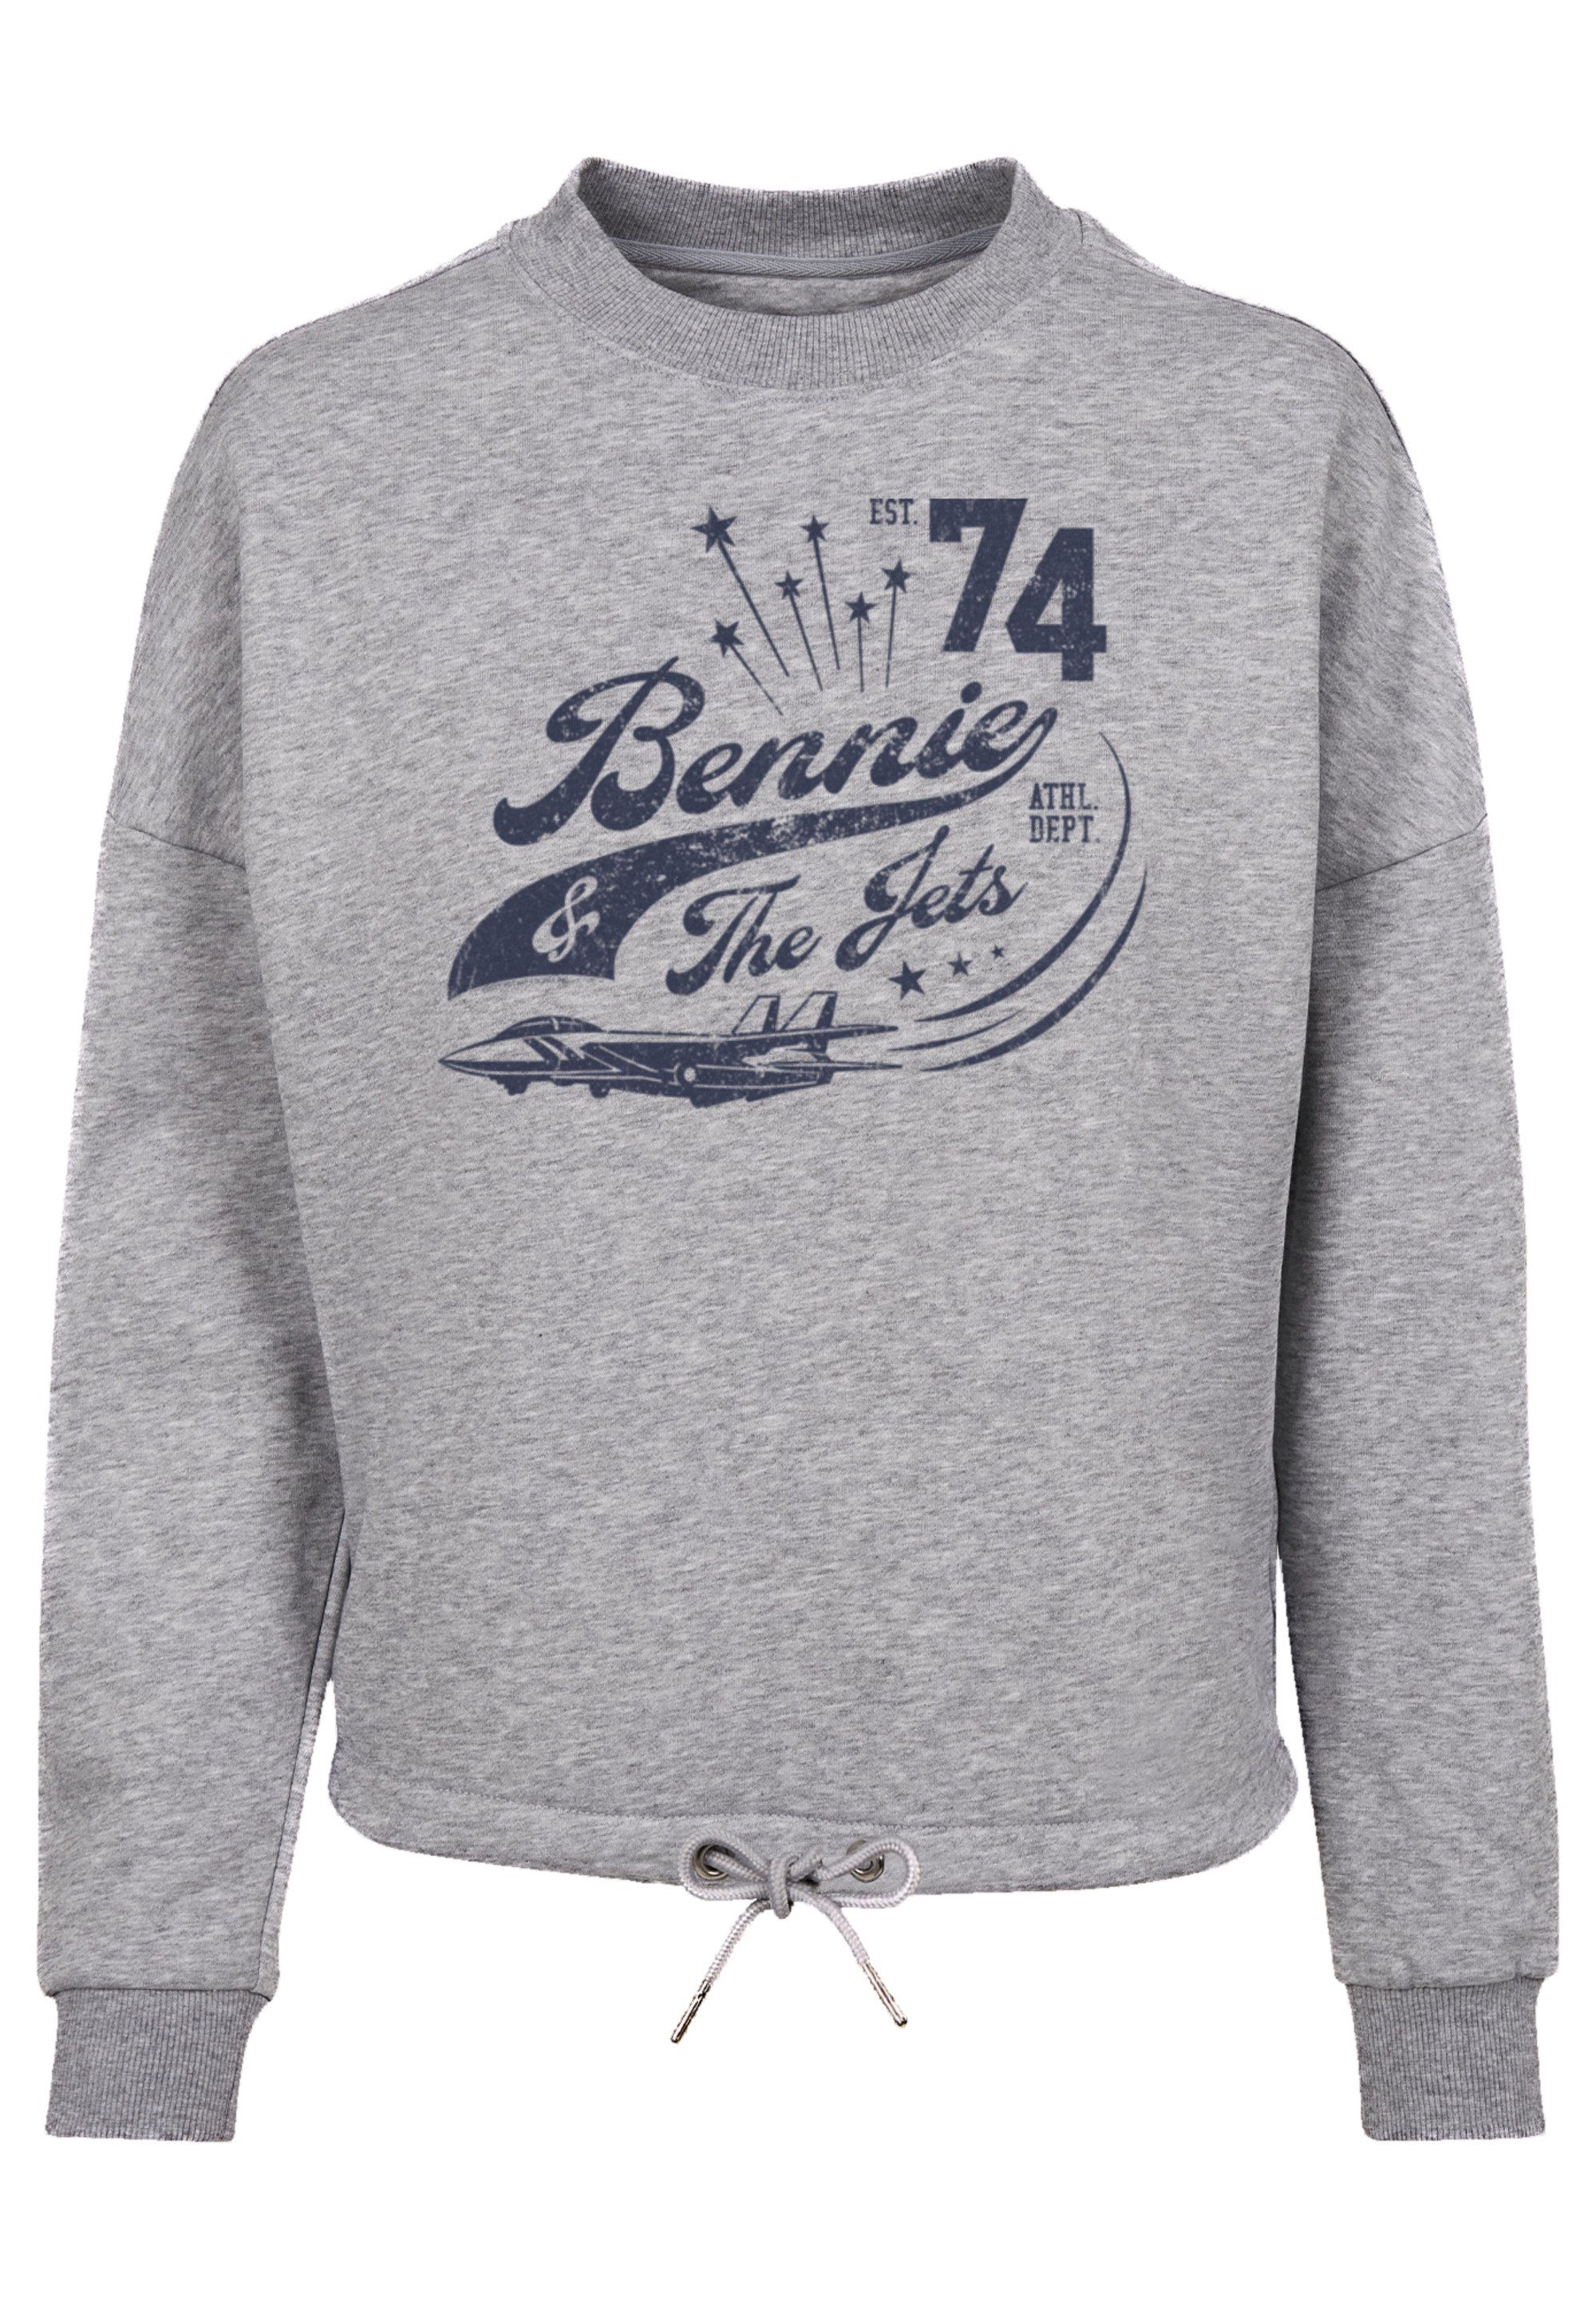 F4NT4STIC Sweatshirt Elton Band, Jets Logo The Musik, Bennie John And